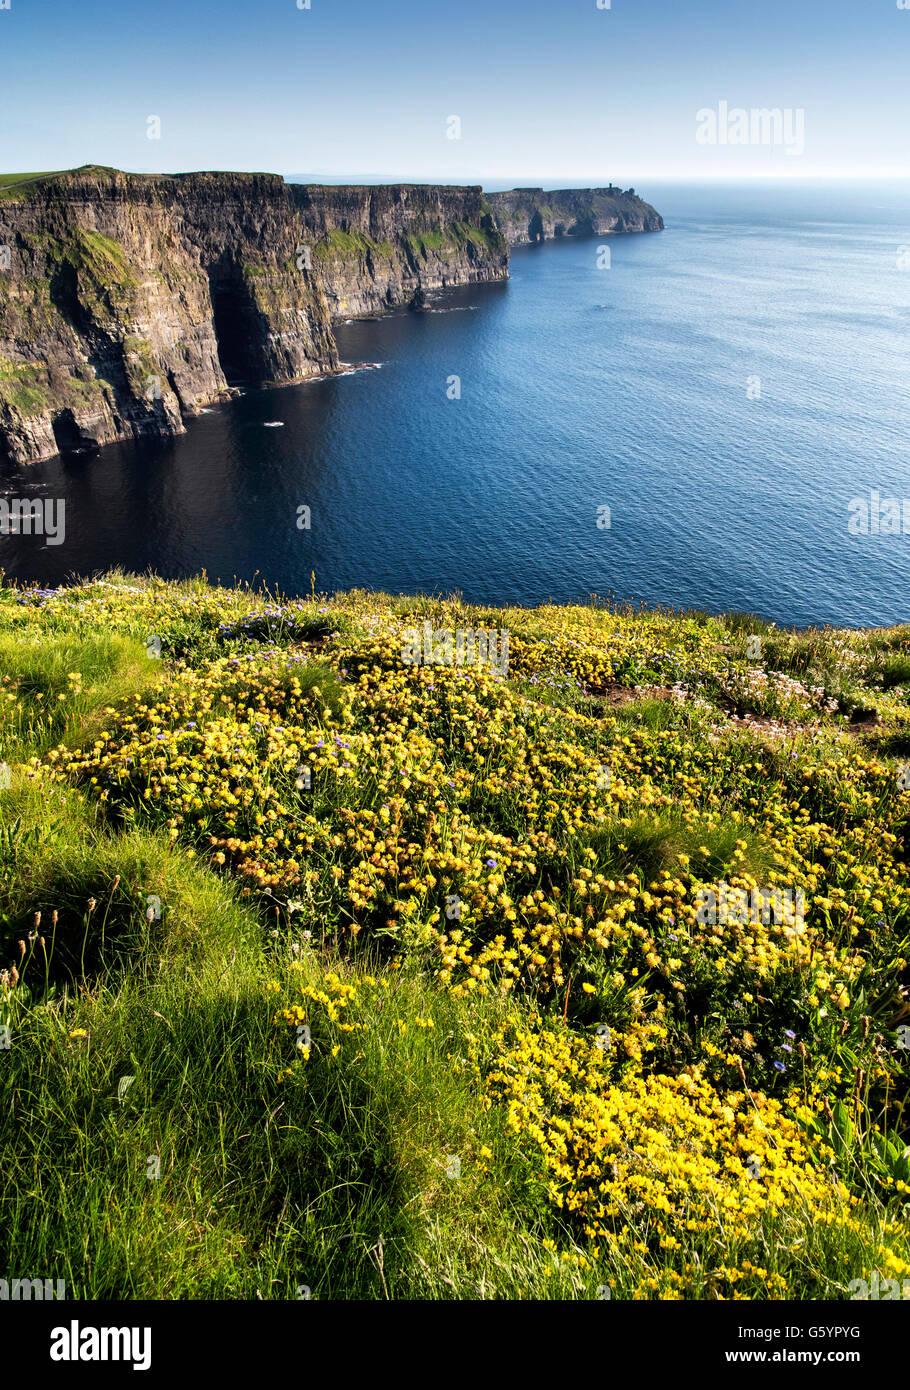 Cliffs of Moher Clare Ireland Wild Atlantic Way Stock Photo